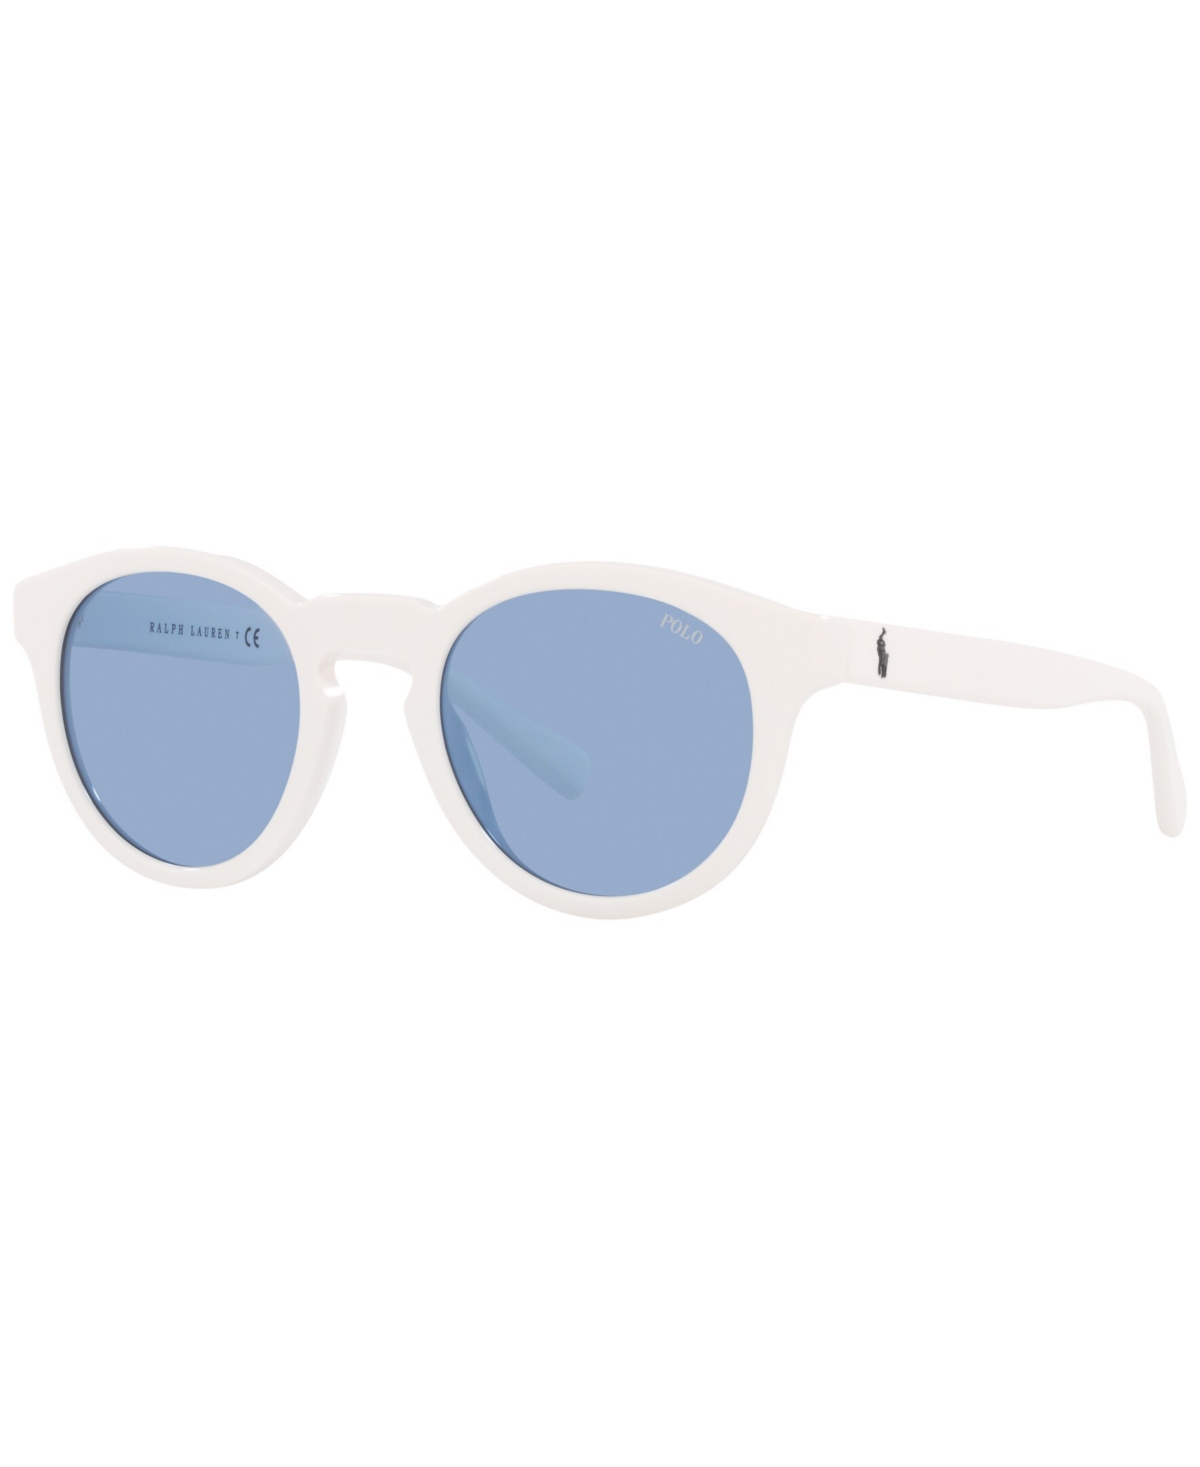 Polo Ralph Lauren Men's Sunglasses, Ph4184 49 In Shiny White